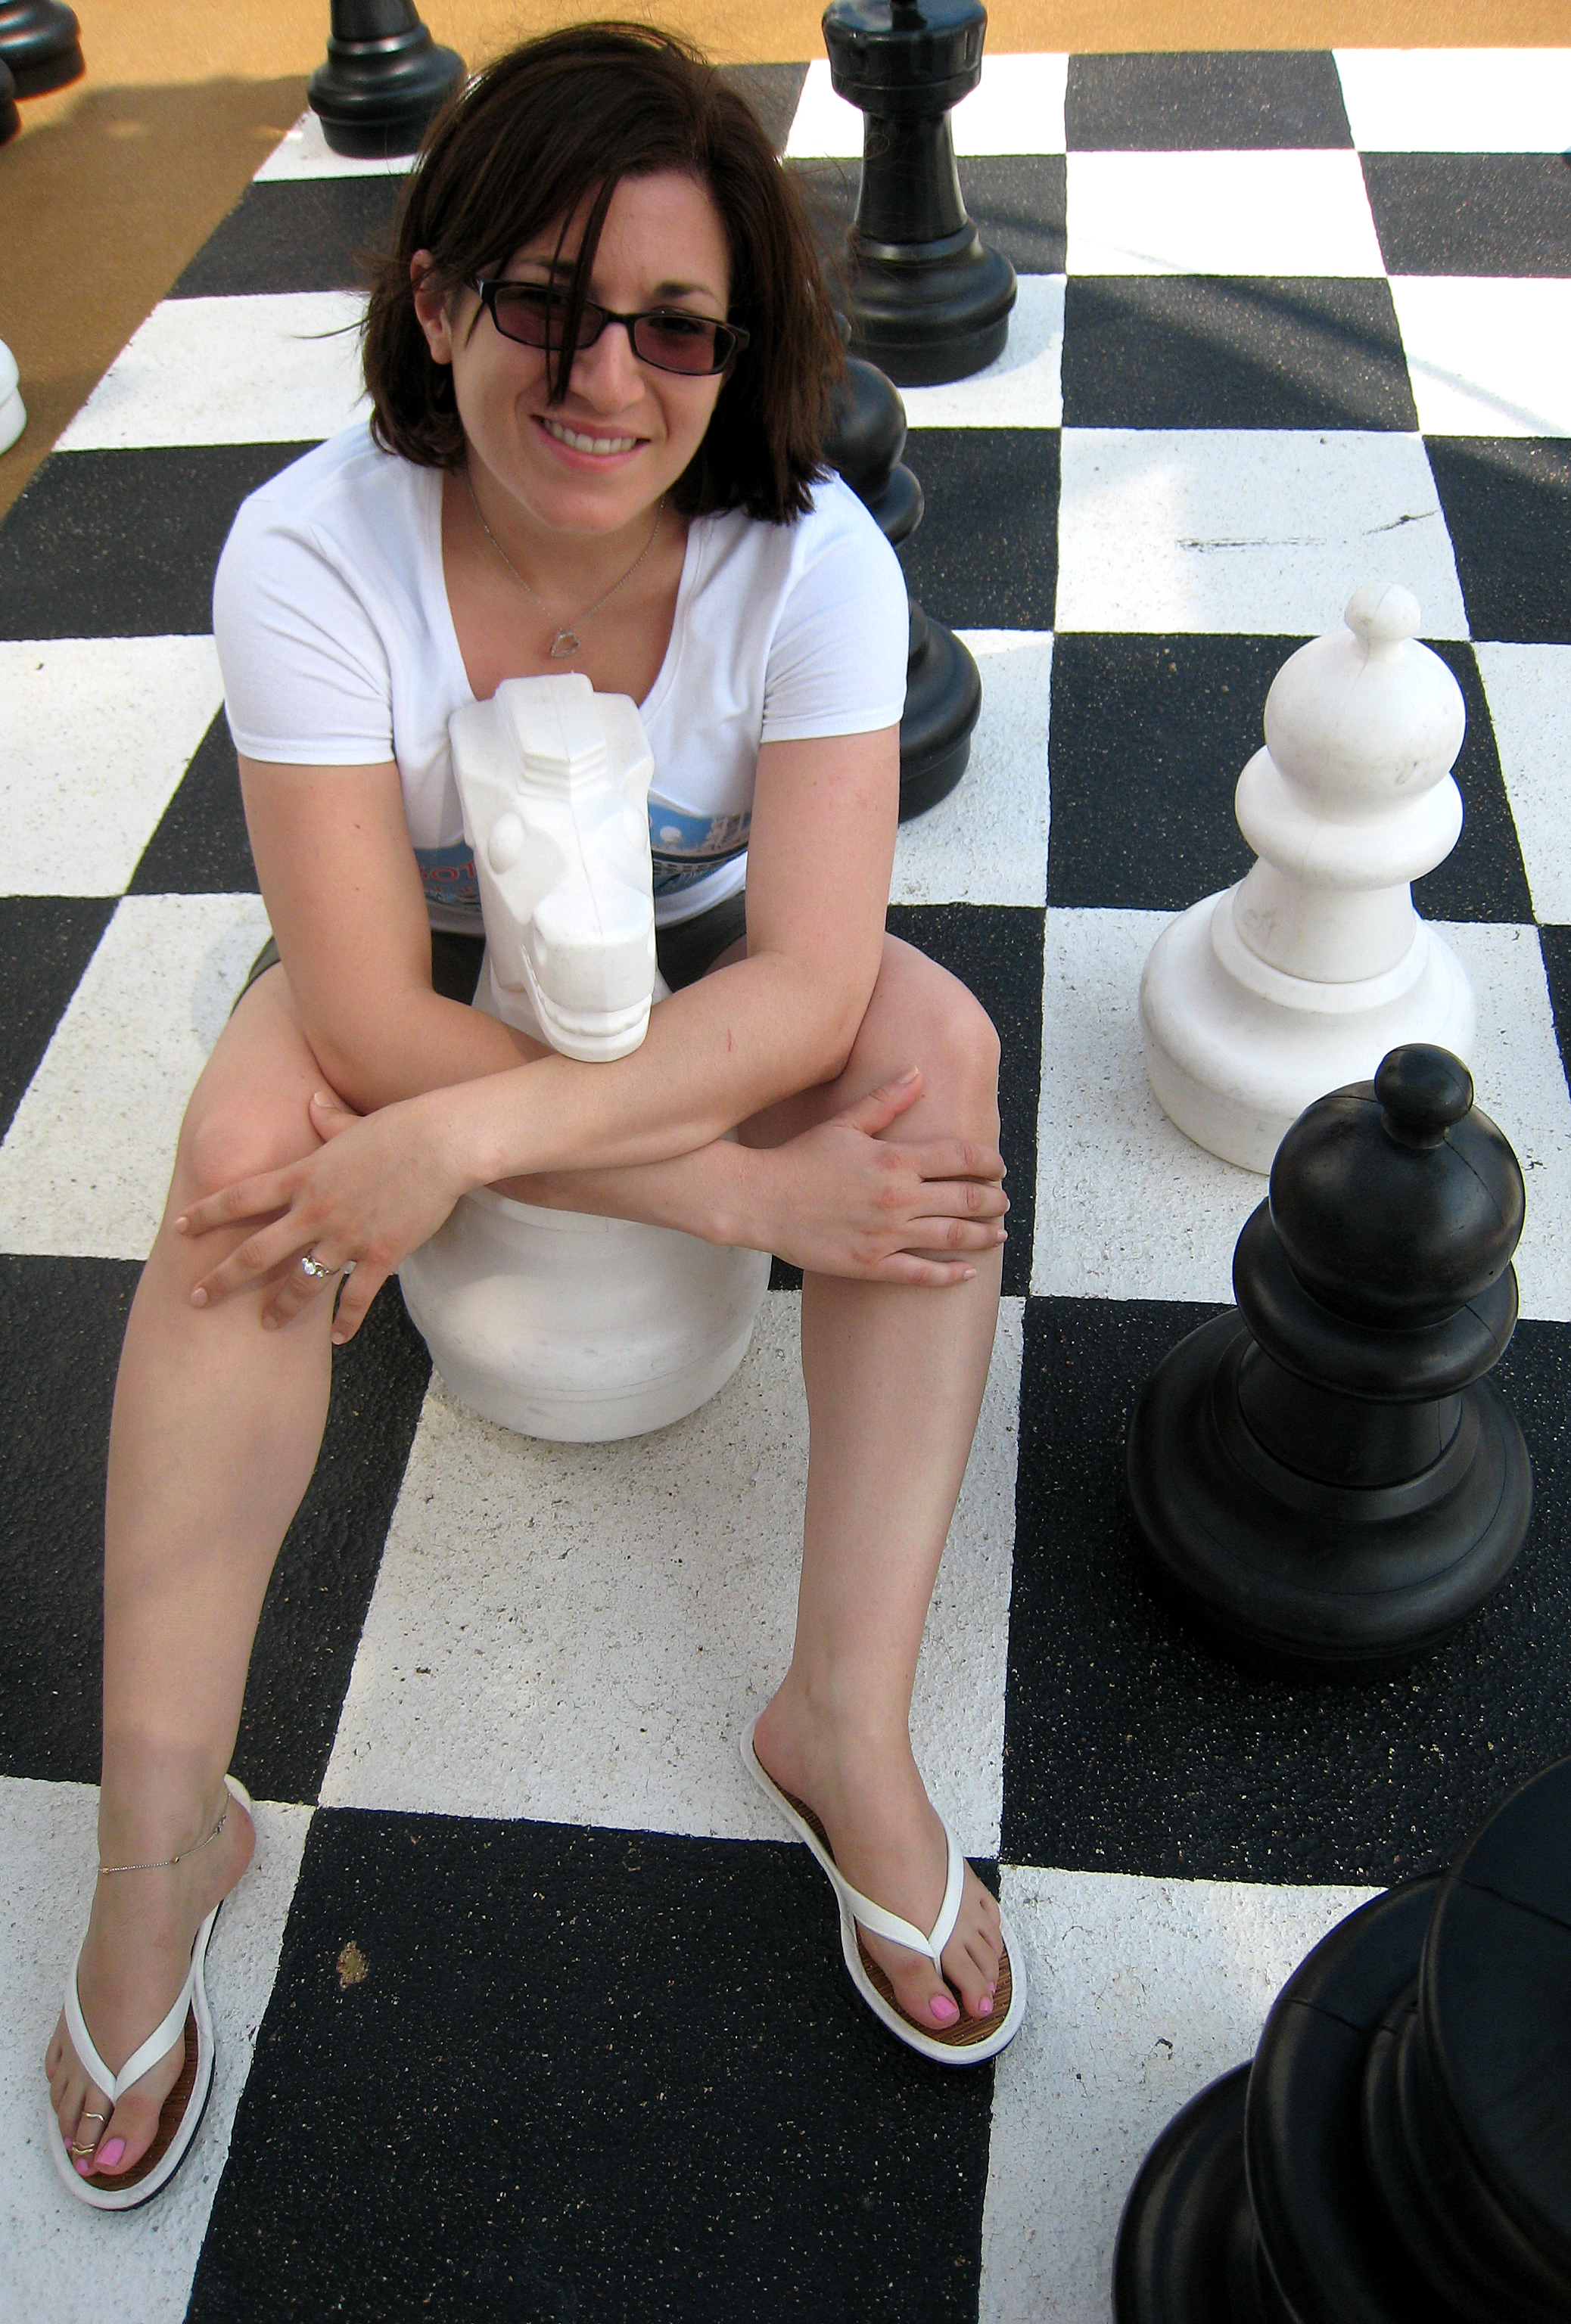 woman_holding_large_chess_piece_in_bermuda-17june2008.jpg